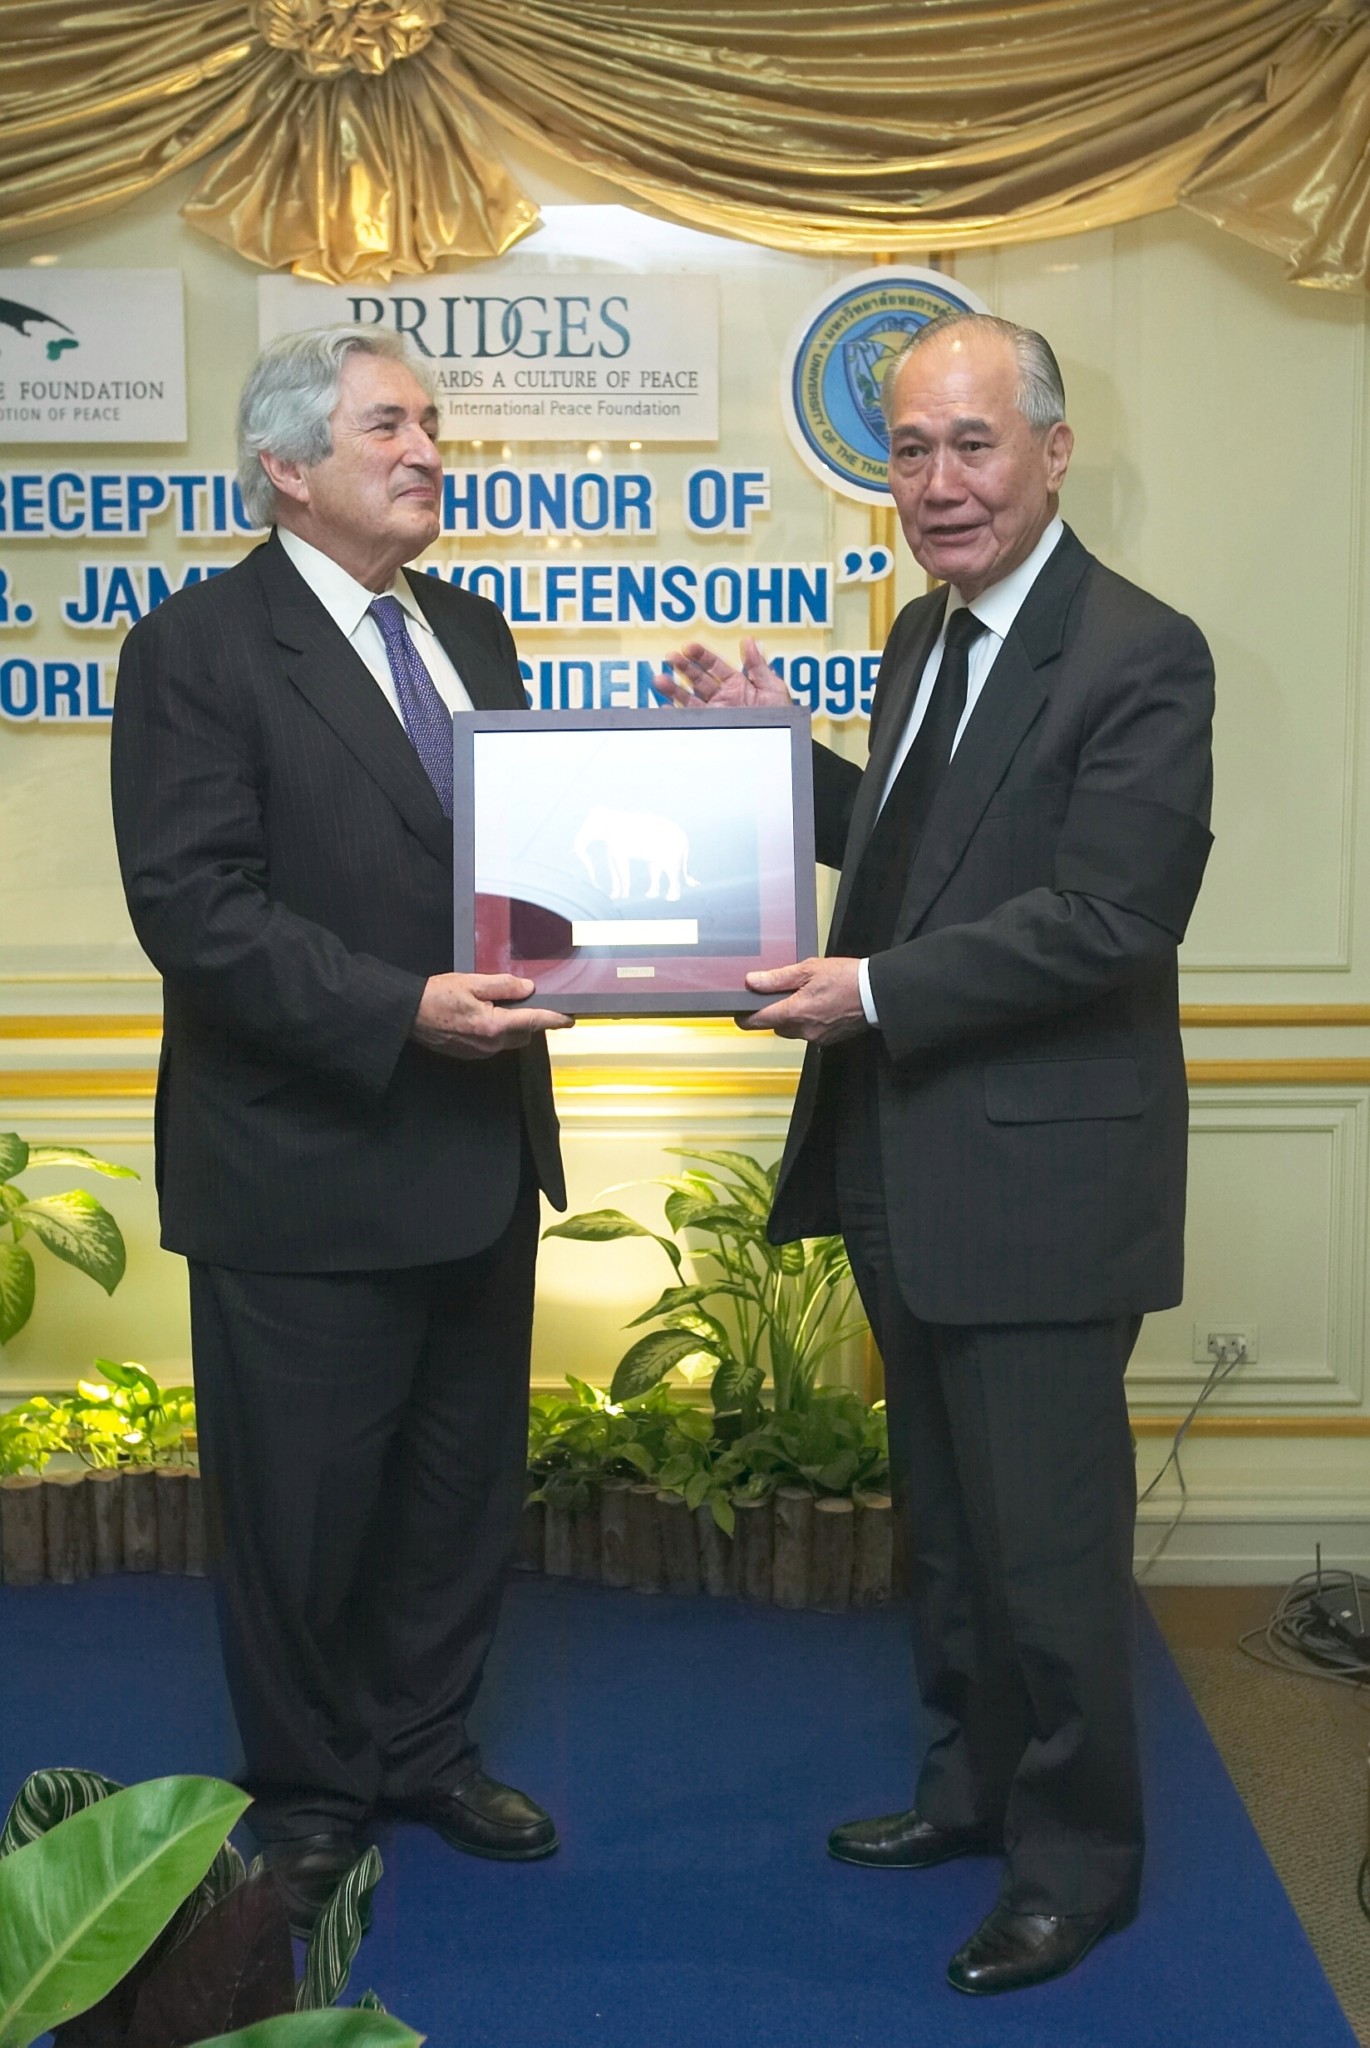 Former World Bank President Dr. James D. Wolfensohn with the Thai Honorary Chairman of Bridges Anand Panyarachun